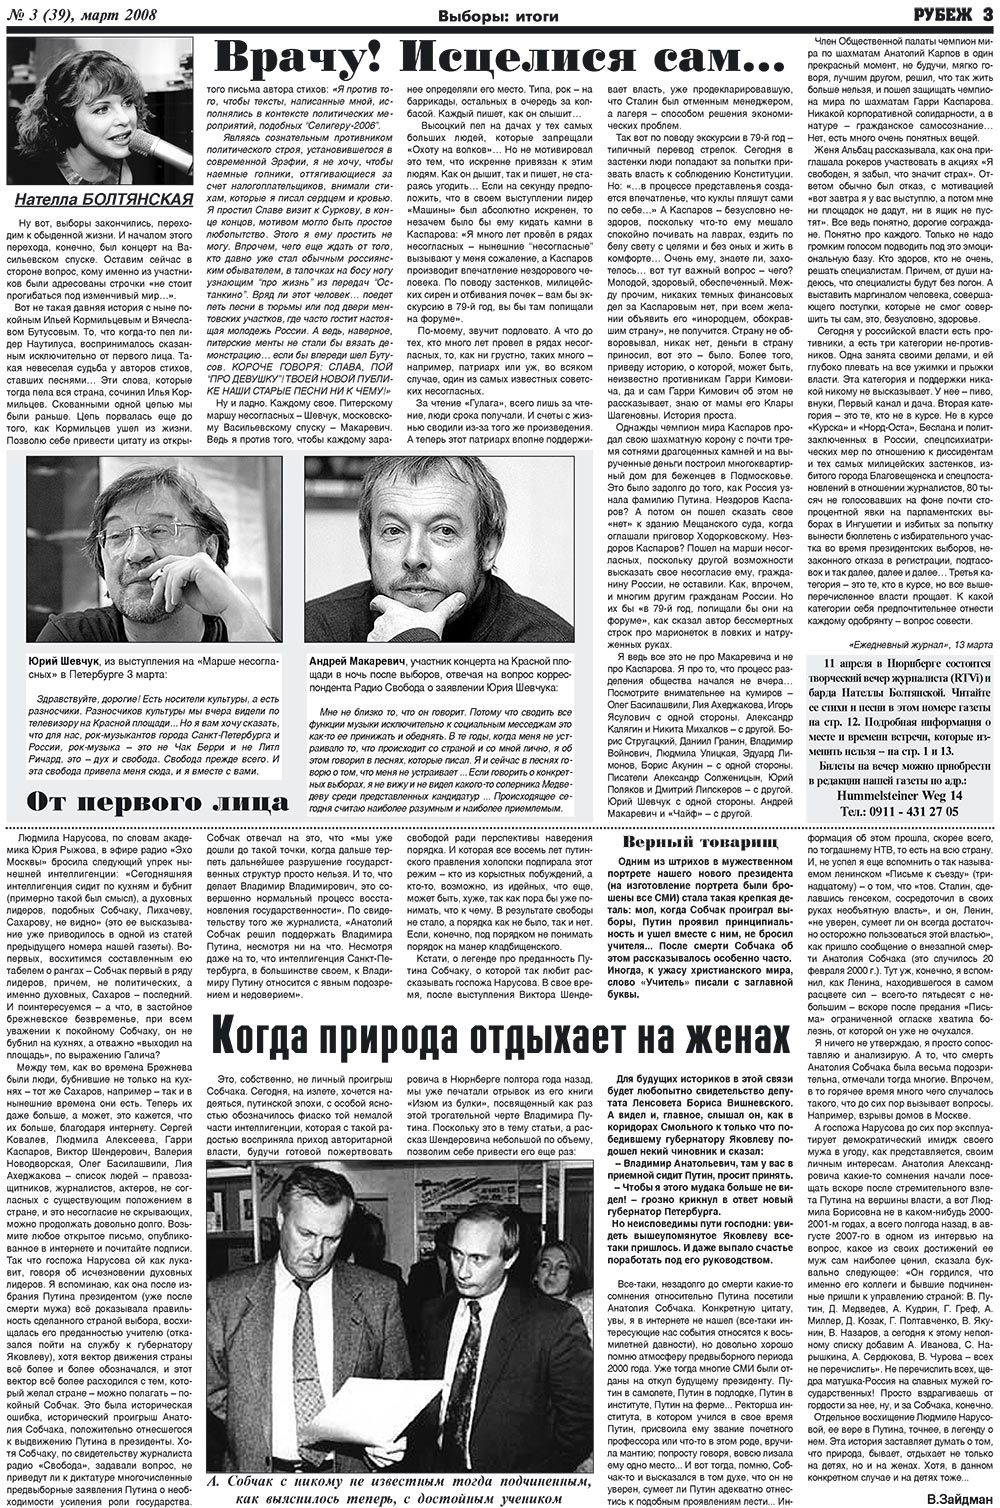 Рубеж, газета. 2008 №3 стр.3